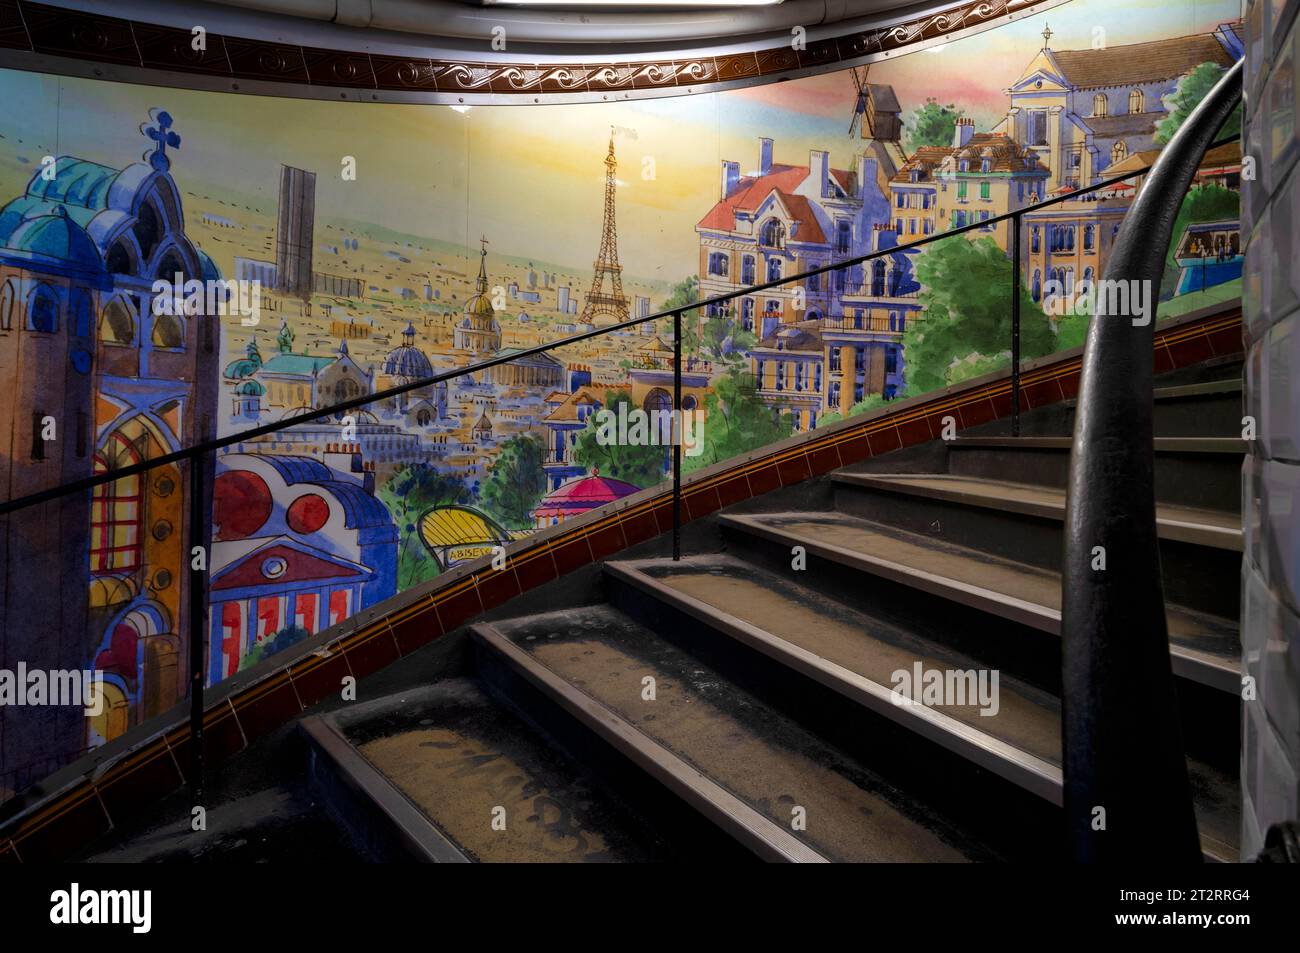 Treppe, Wendeltreppe, mit Sehenswürdigkeiten gestaltet, Eiffelturm, Moulin Rouge, Montparnasse, Metro-Station Abbesses, Montmartre, Metro, Paris Stockfoto